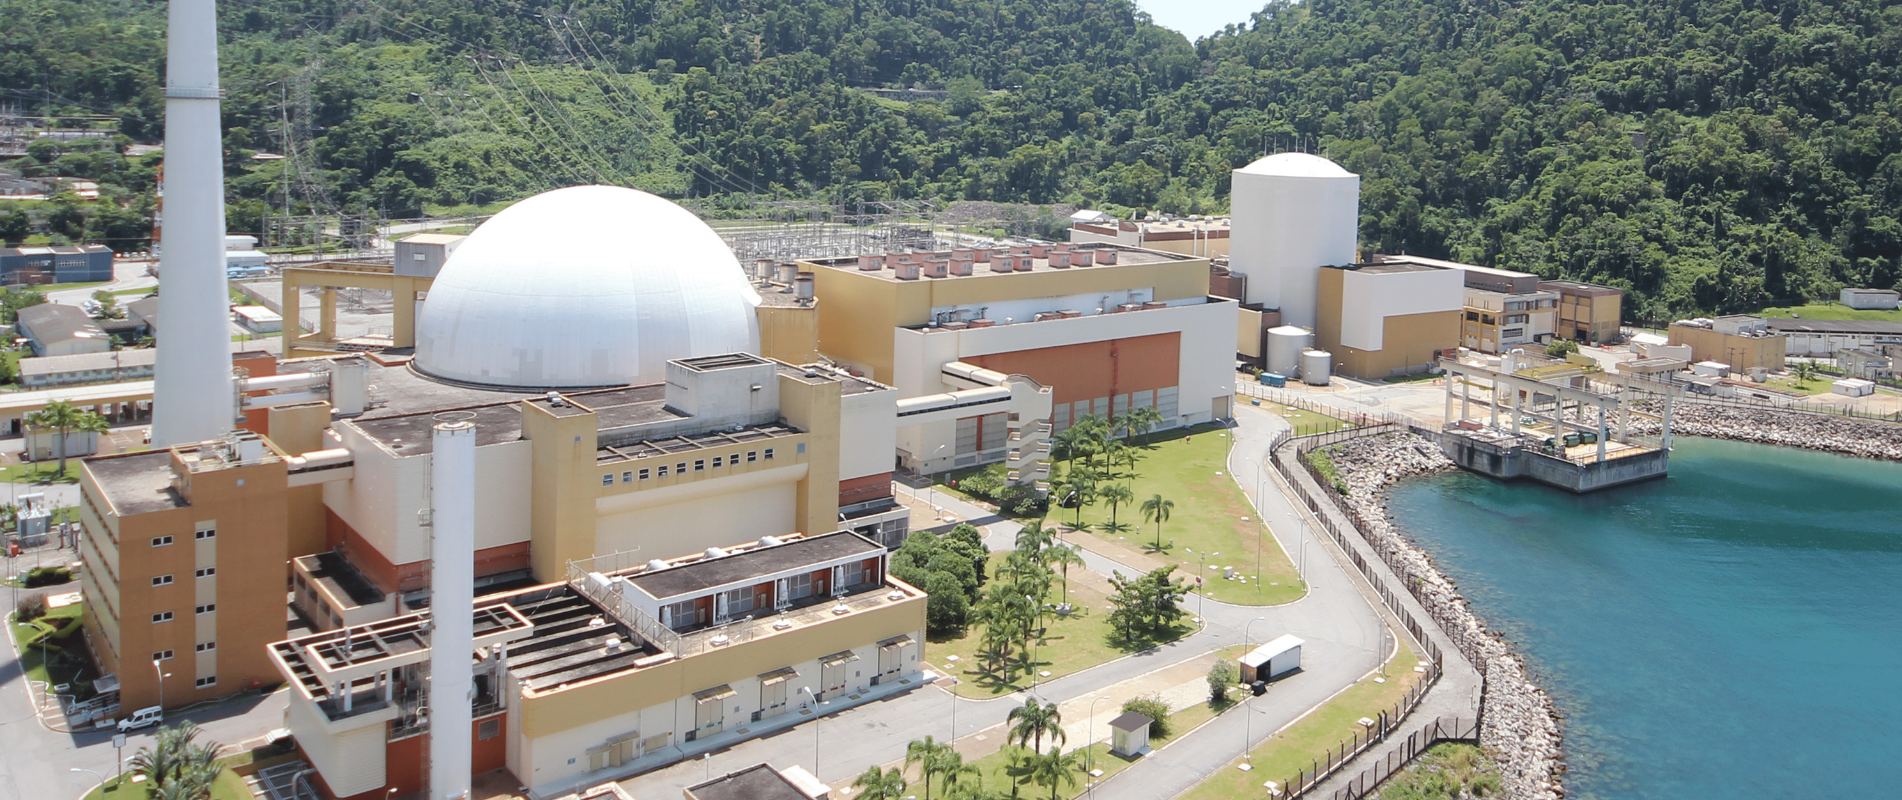 Grupo de trabalho vai auxiliar Programa Nuclear Brasileiro